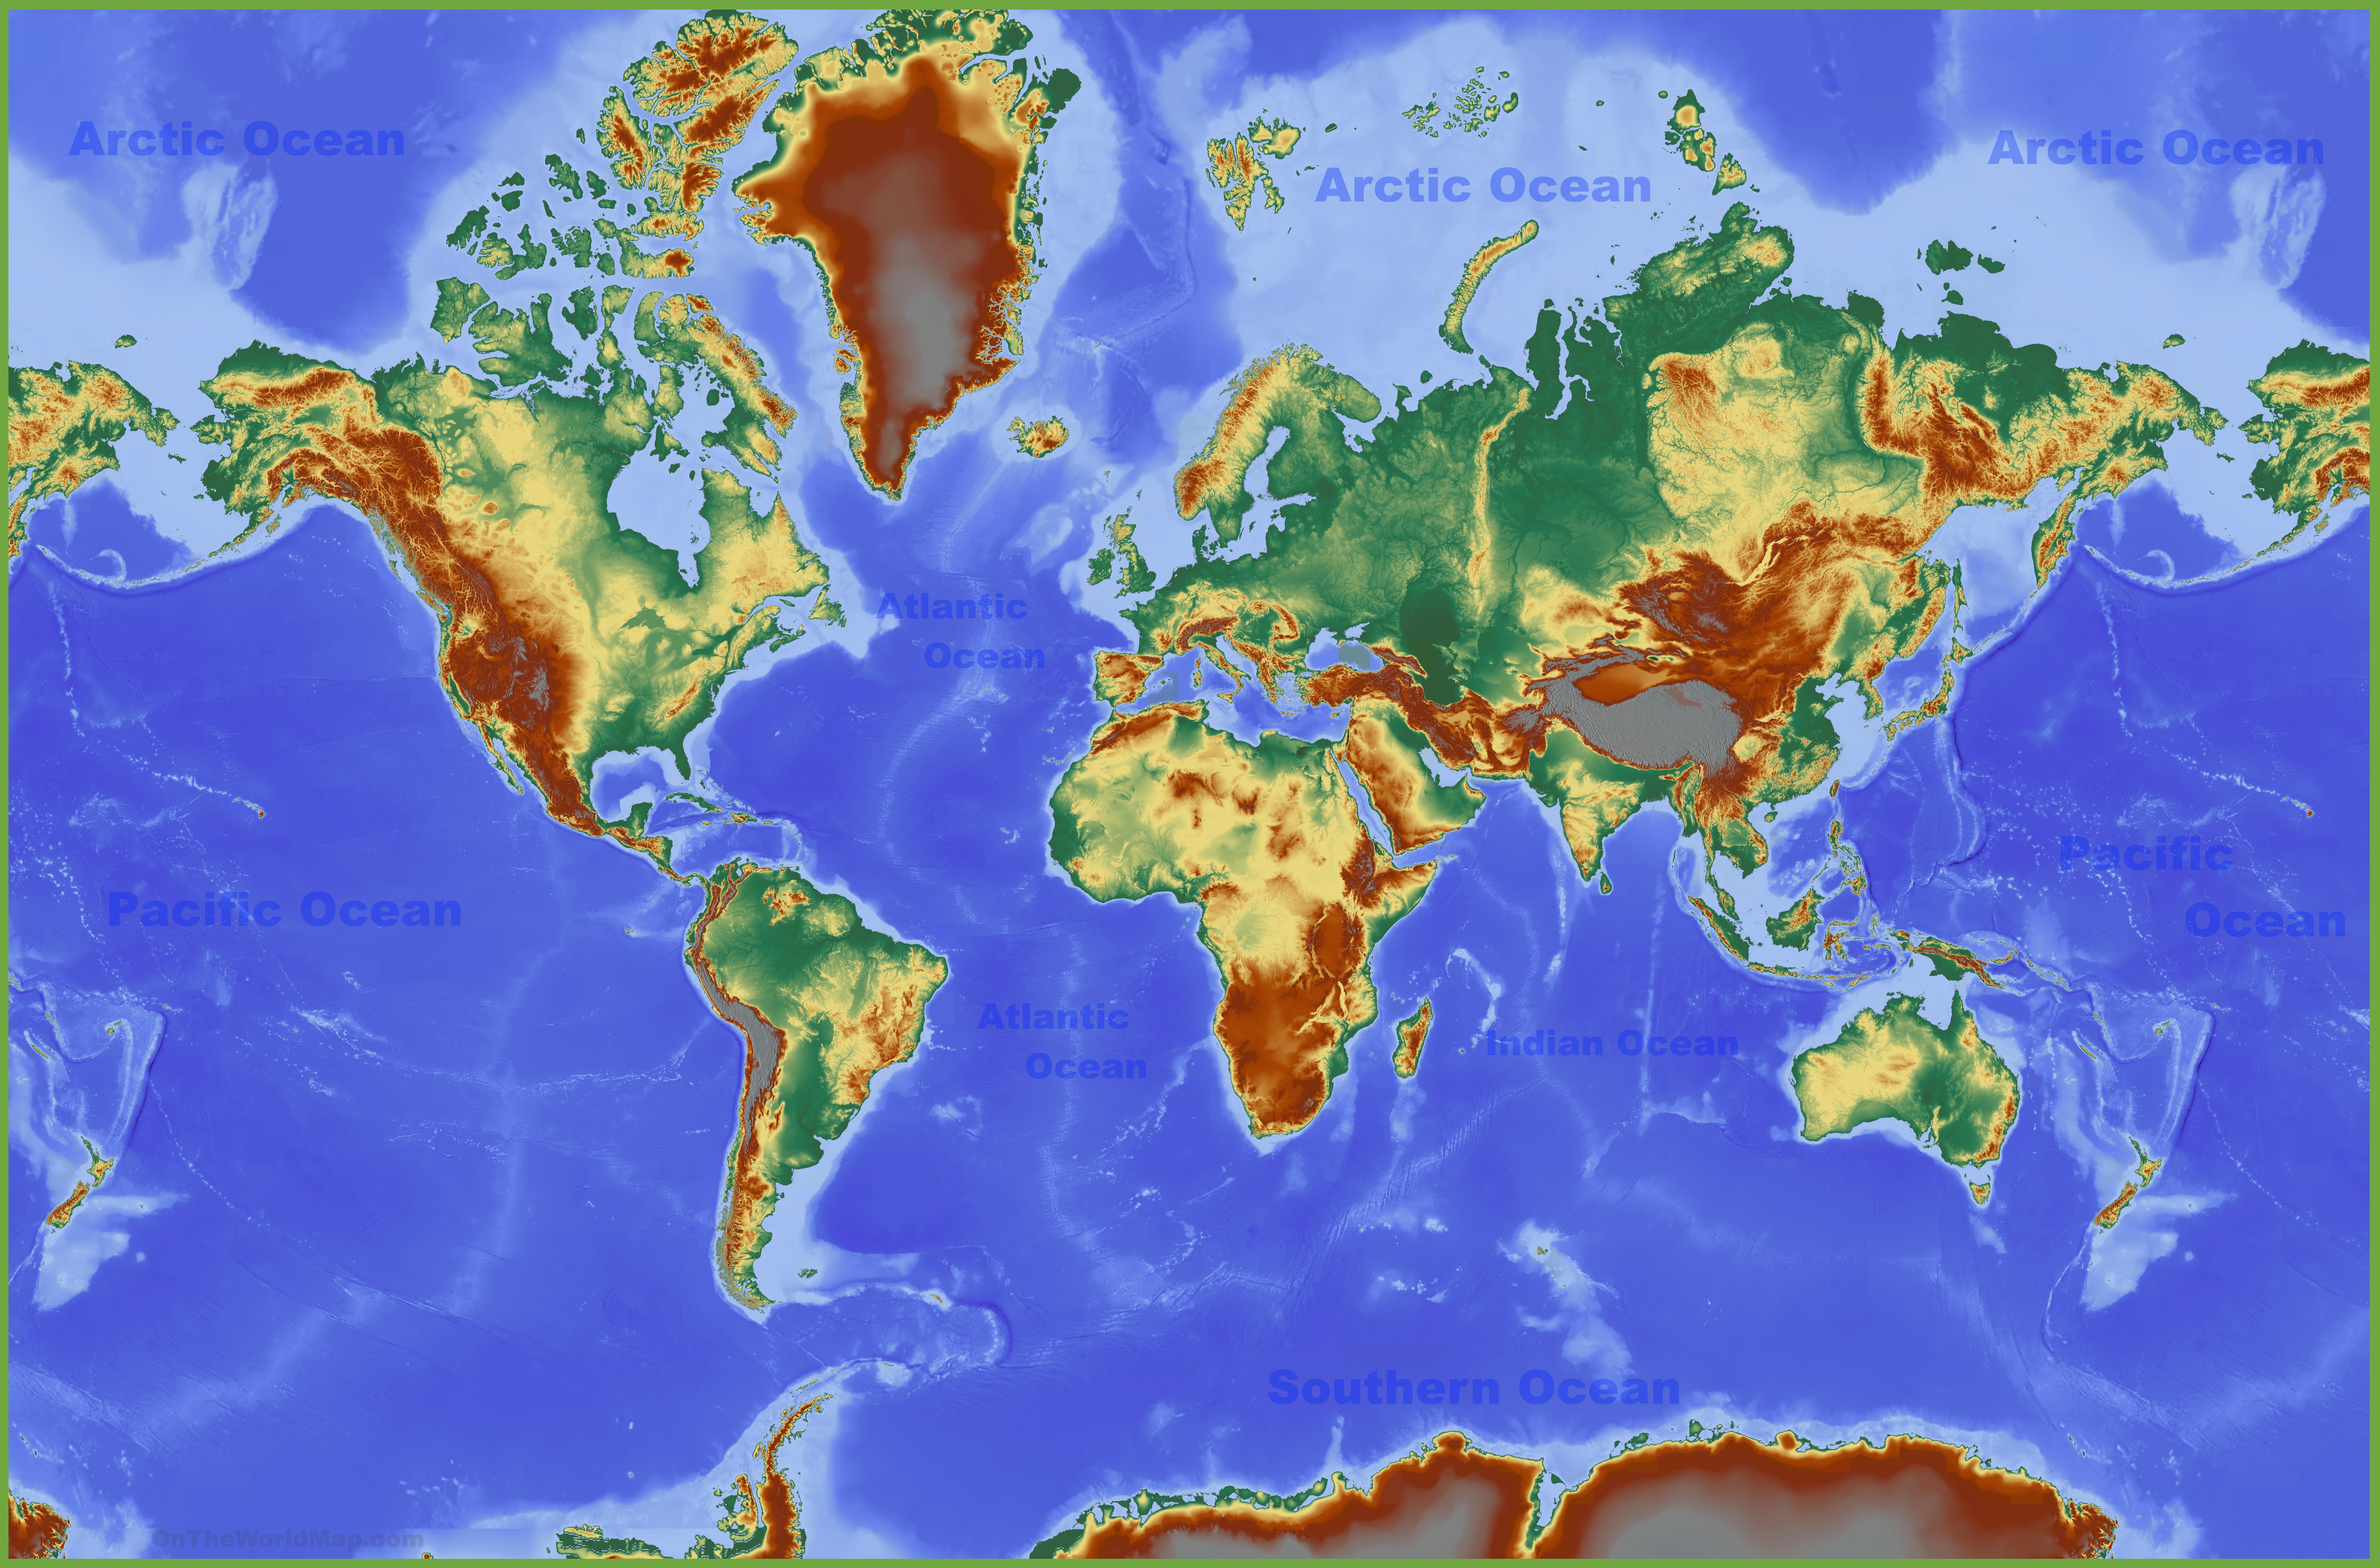 Karta. Карта рельефа мира. Карта мира рельефная физическая. Географическая карта мира с рельефом. Рельеф земли на карте мира.